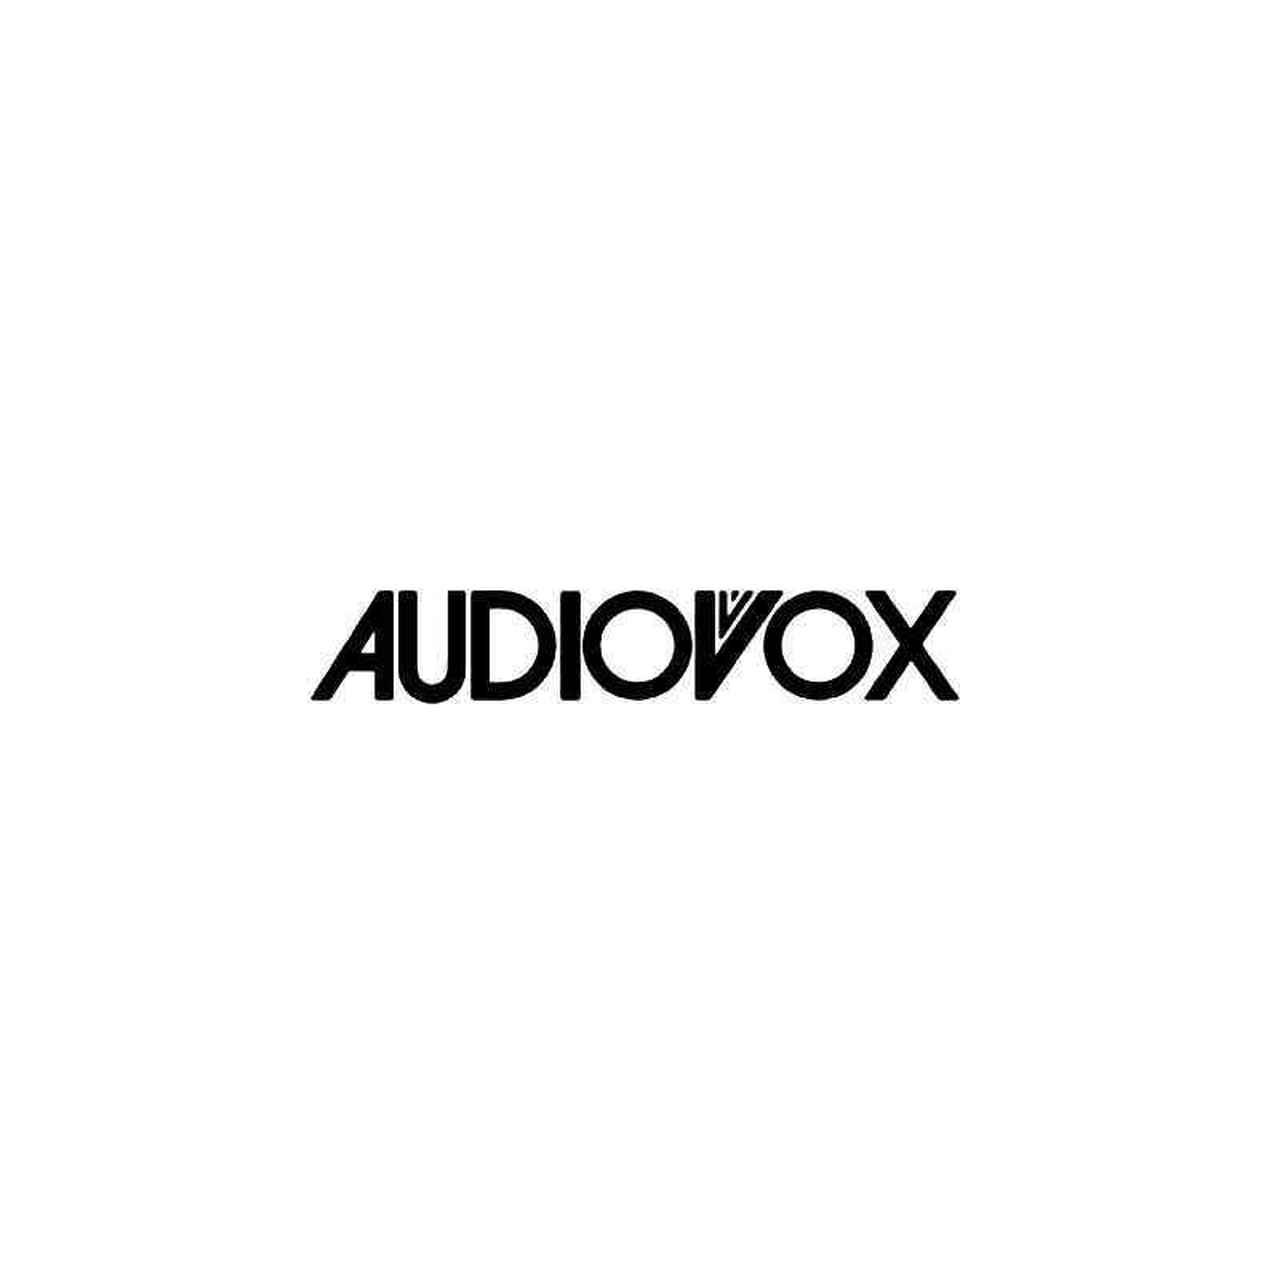 Audiovox Logo - Audiovox Logo 1 Vinyl Sticker